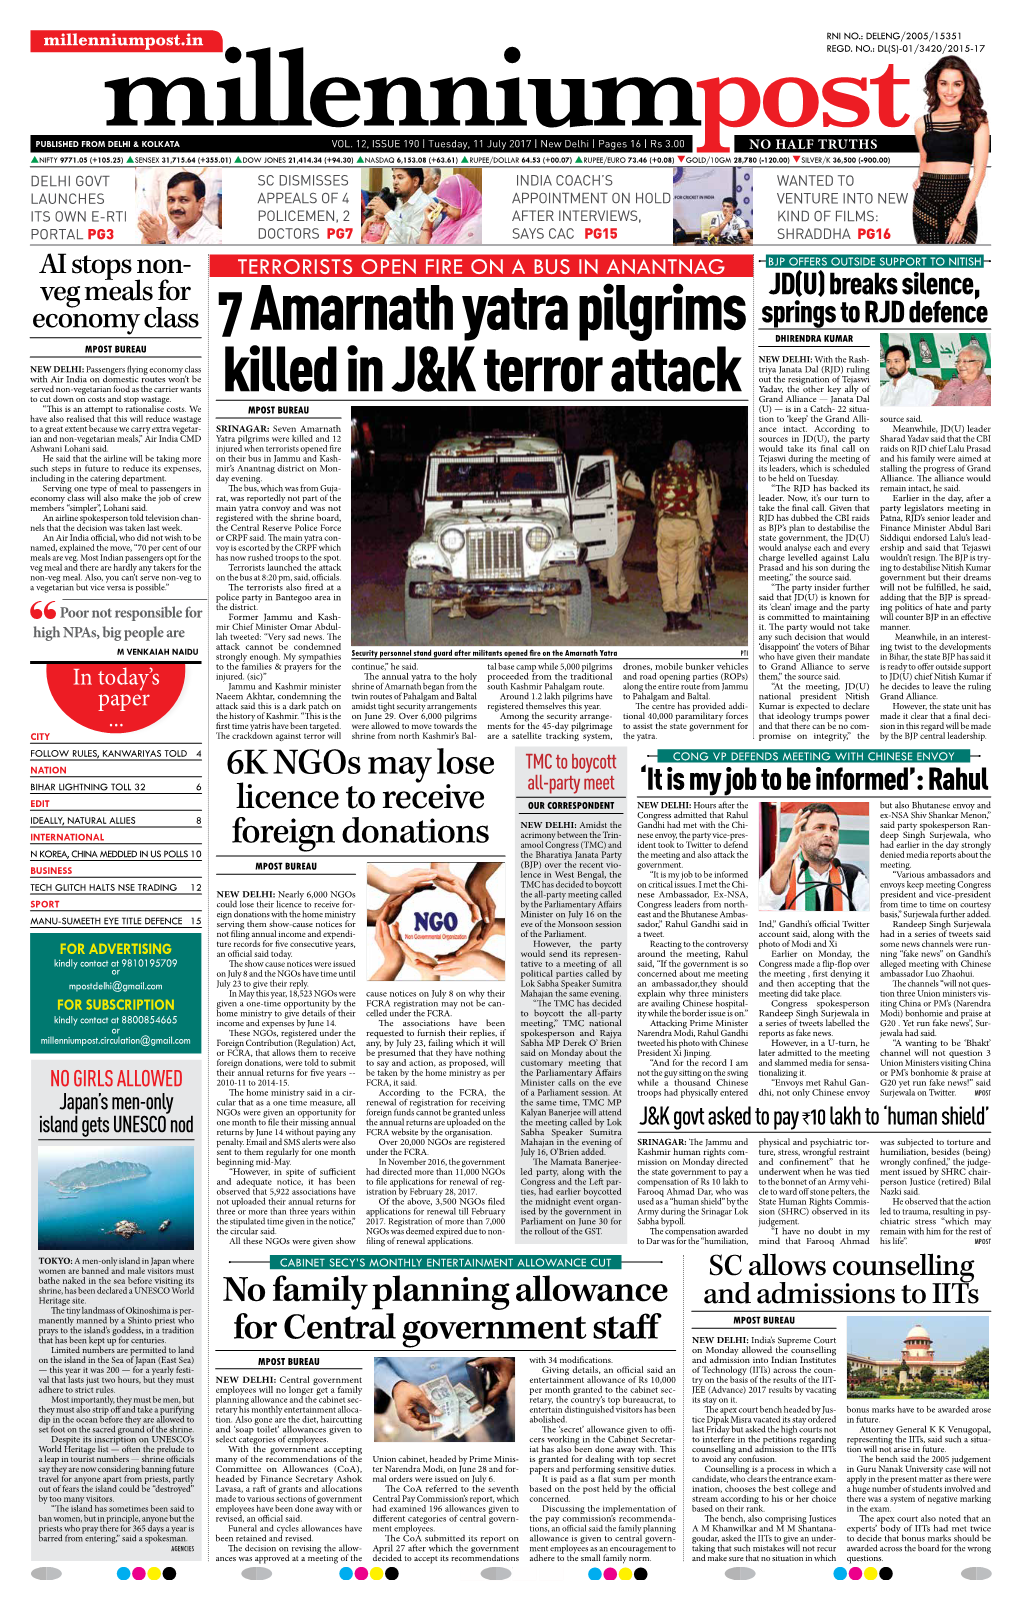 Economy Class 7 Amarnath Yatra Pilgrims Killed in J&K Terror Attack